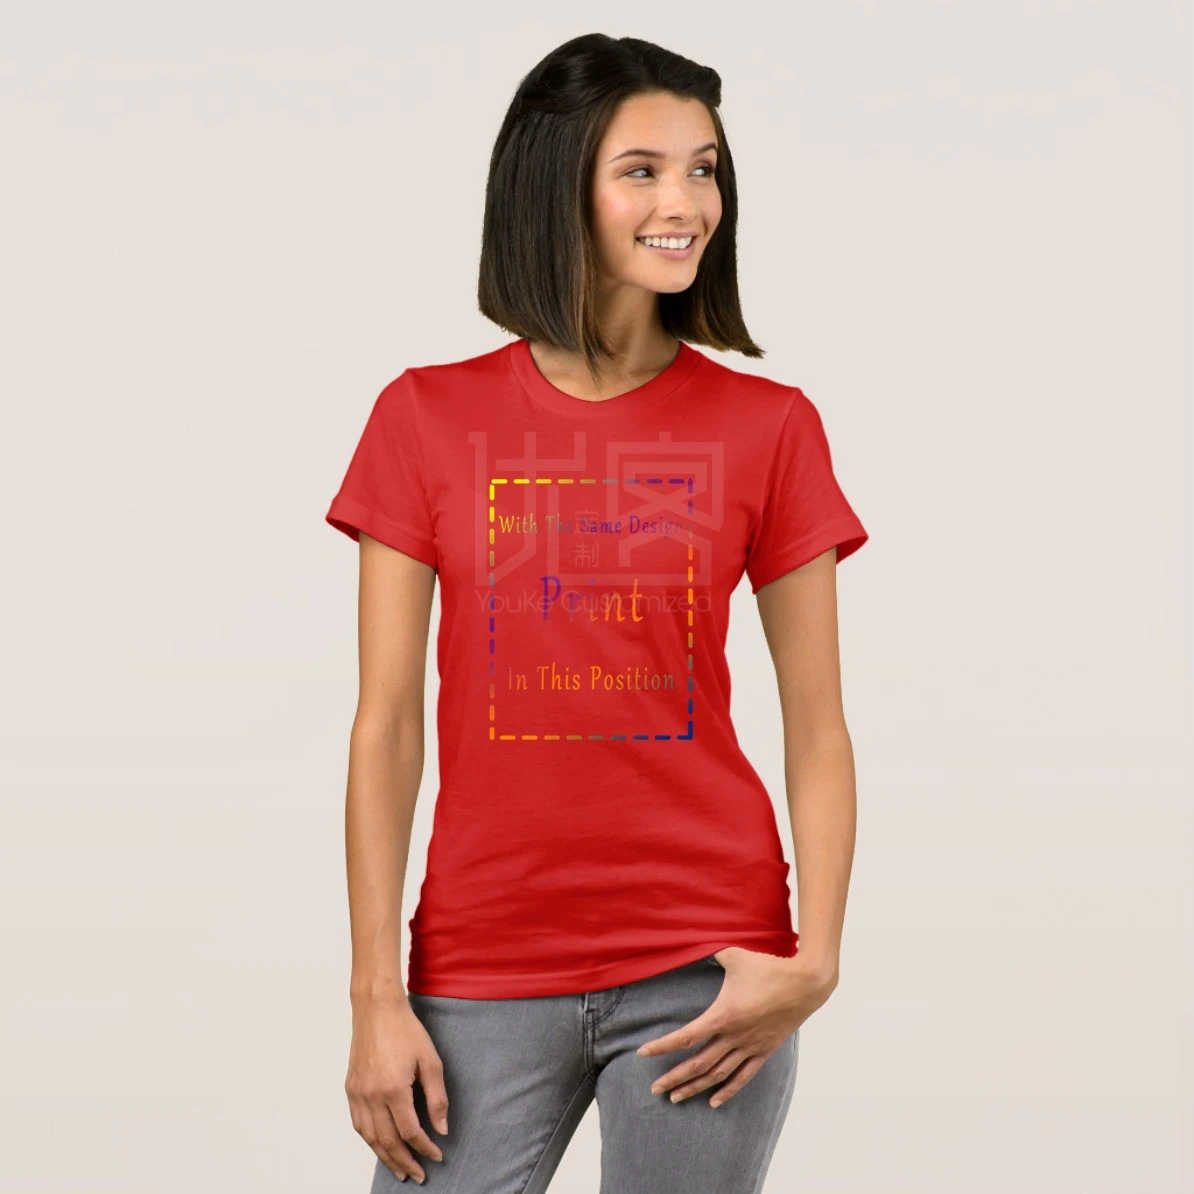 Led Zeppelin US Тур 75 усиленная футболка унисекс - Цвет: women red